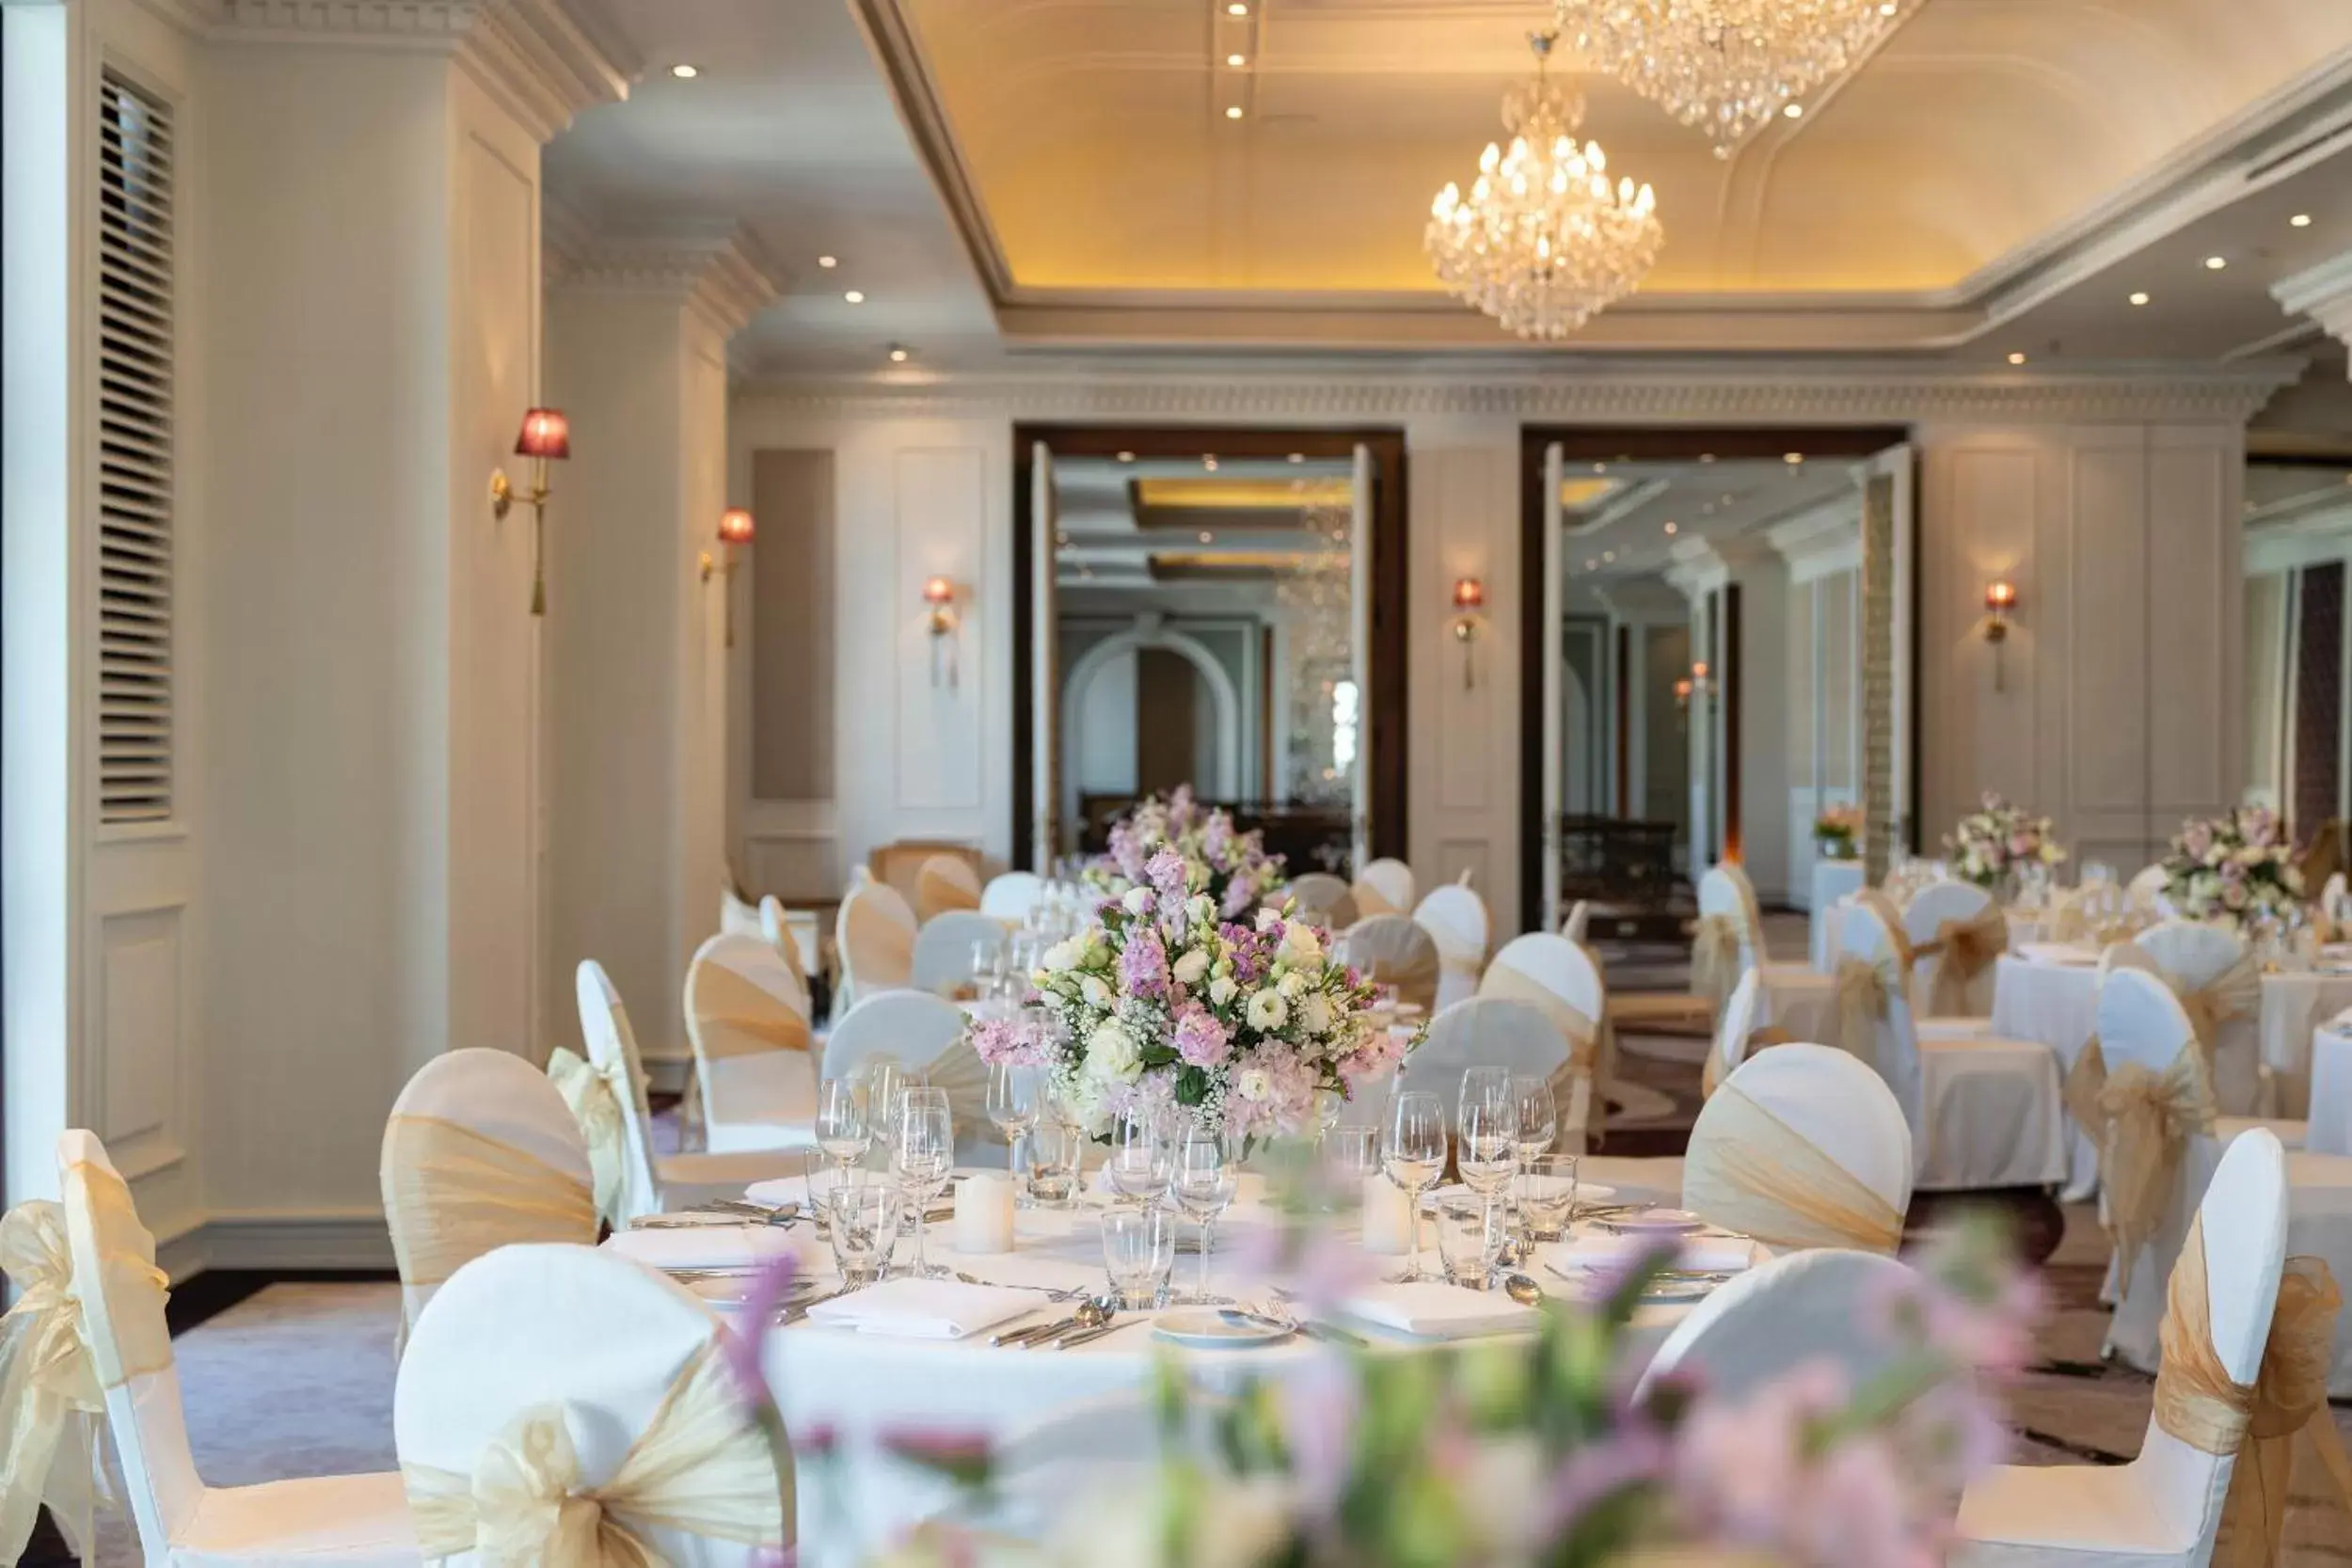 Banquet/Function facilities, Banquet Facilities in Tower Club at lebua